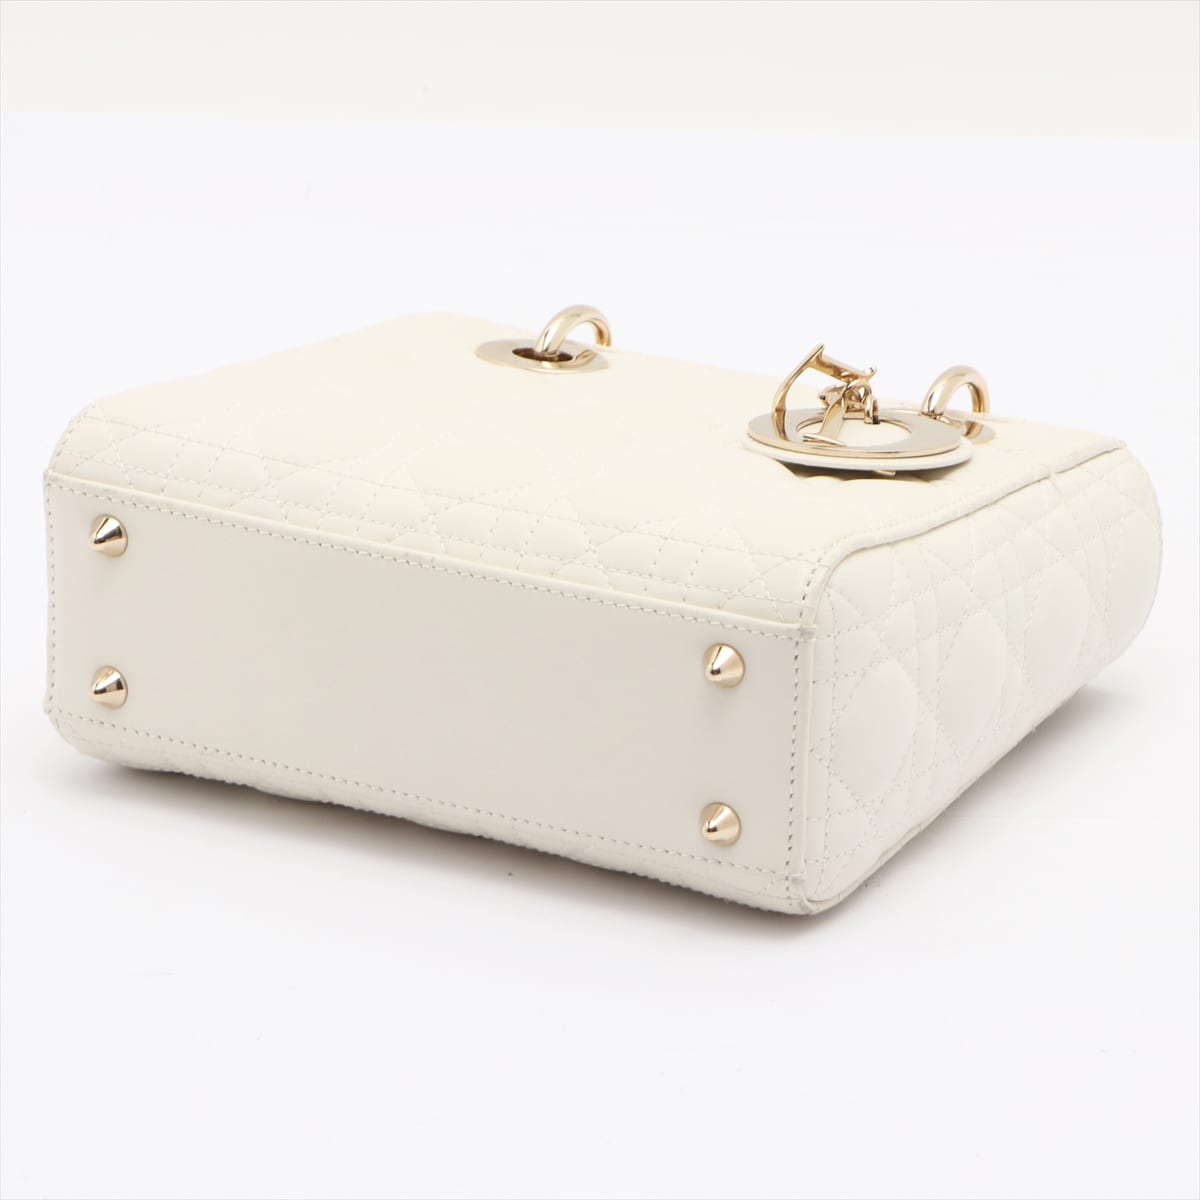 Christian Dior Lady Dior Cannage Lambskin 2way handbag White